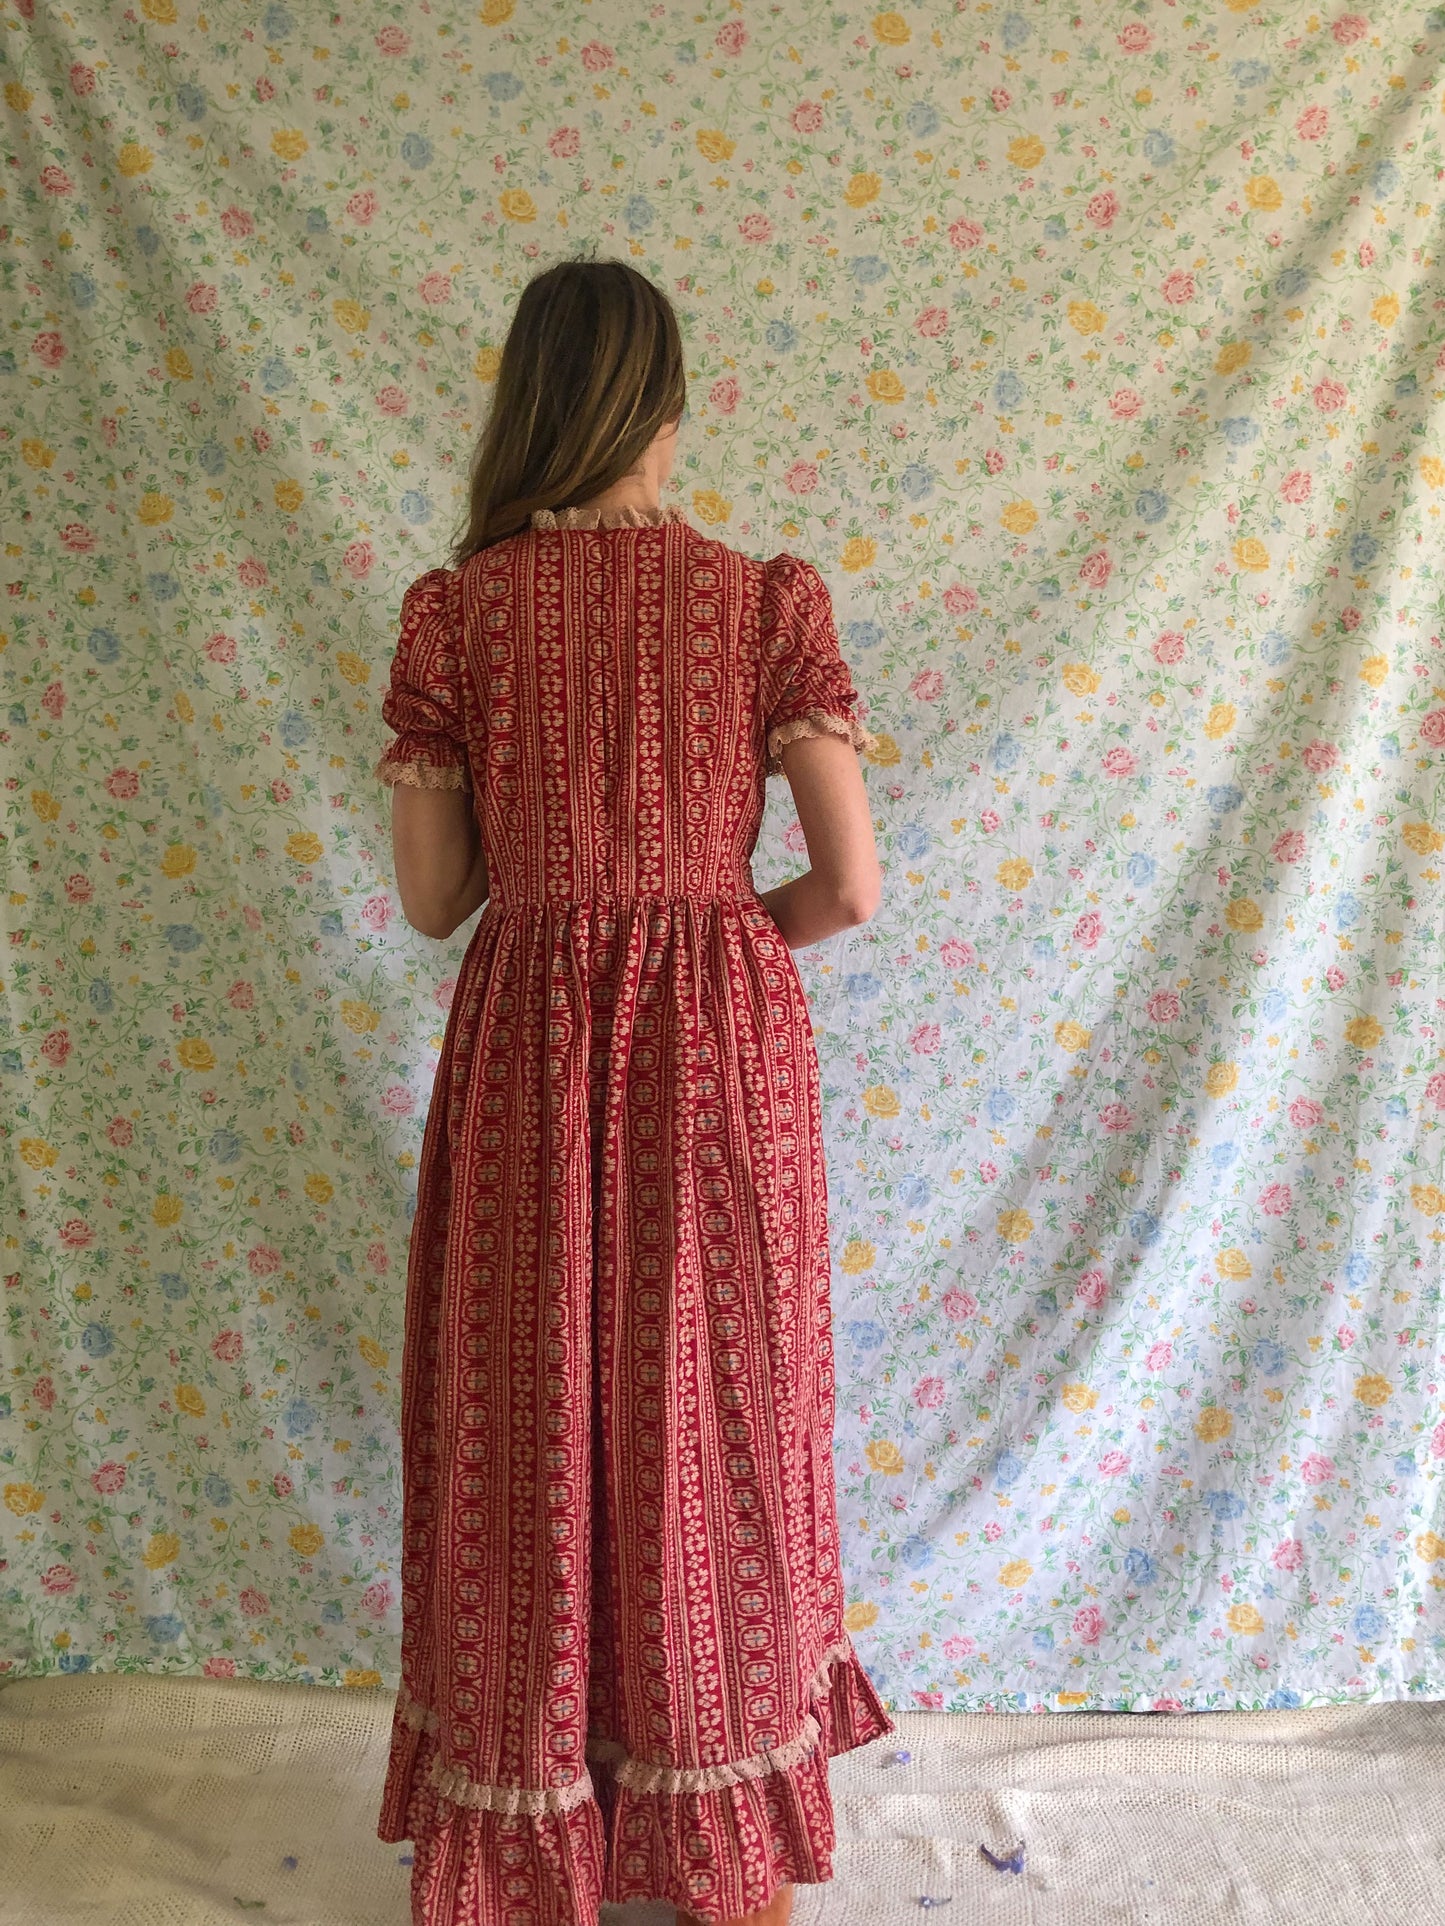 Cutch Lace Patterned Dress